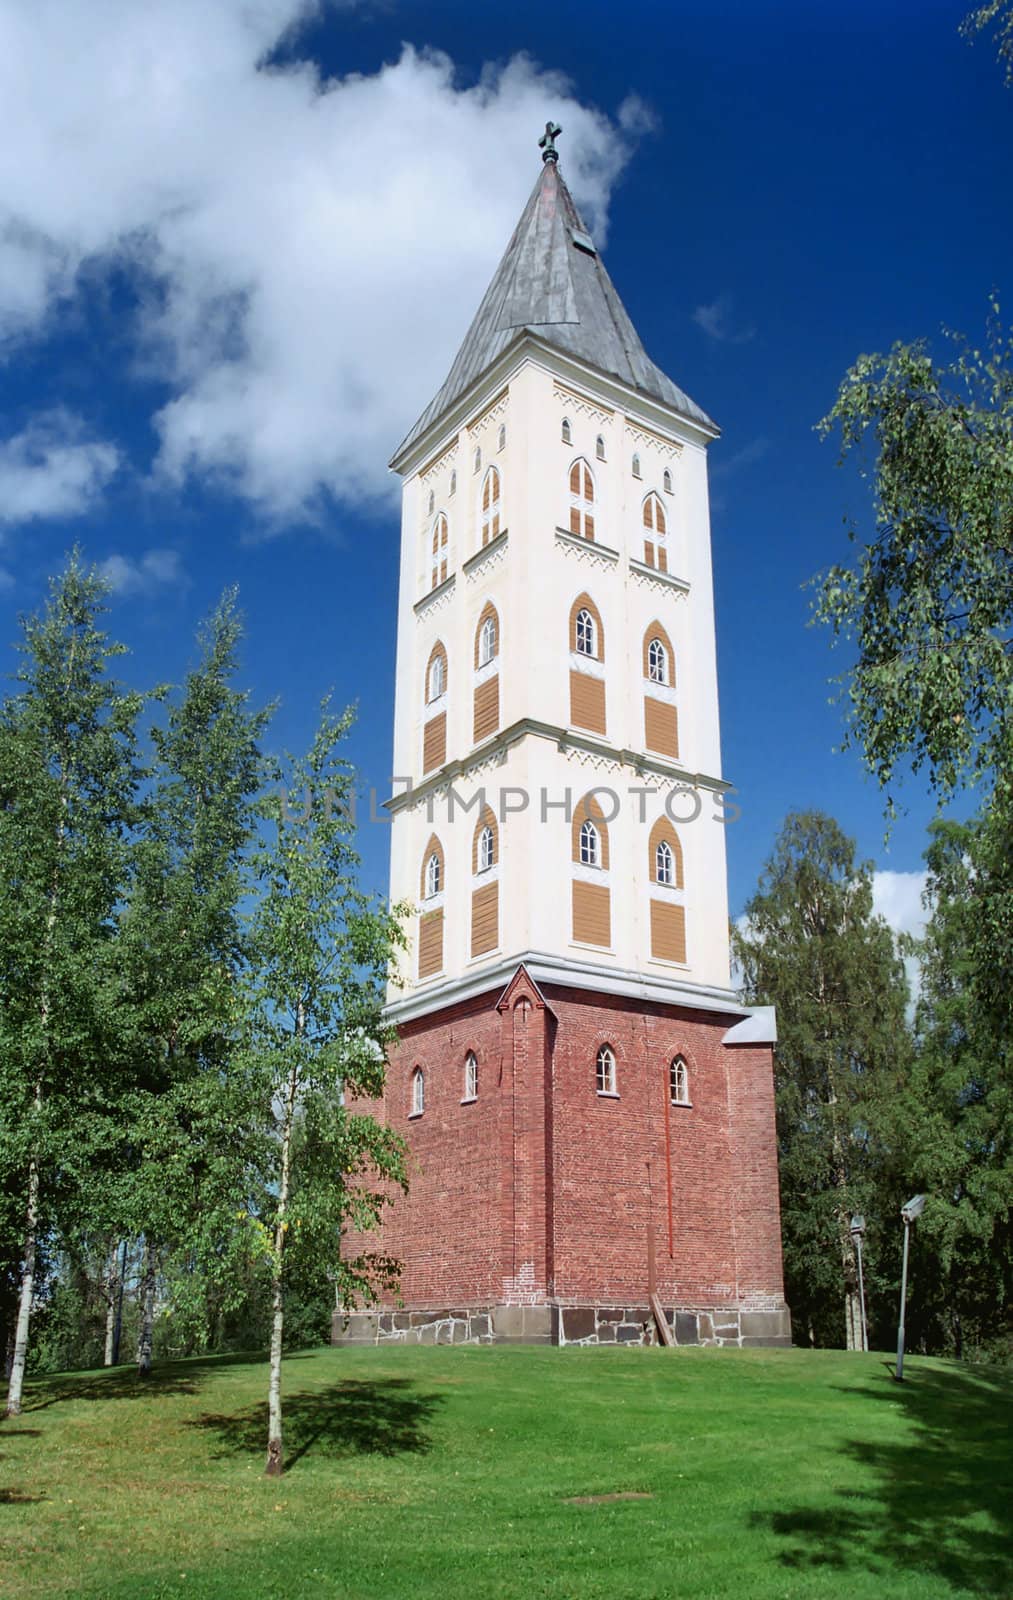 Lappeenranta church in Finland by mulden